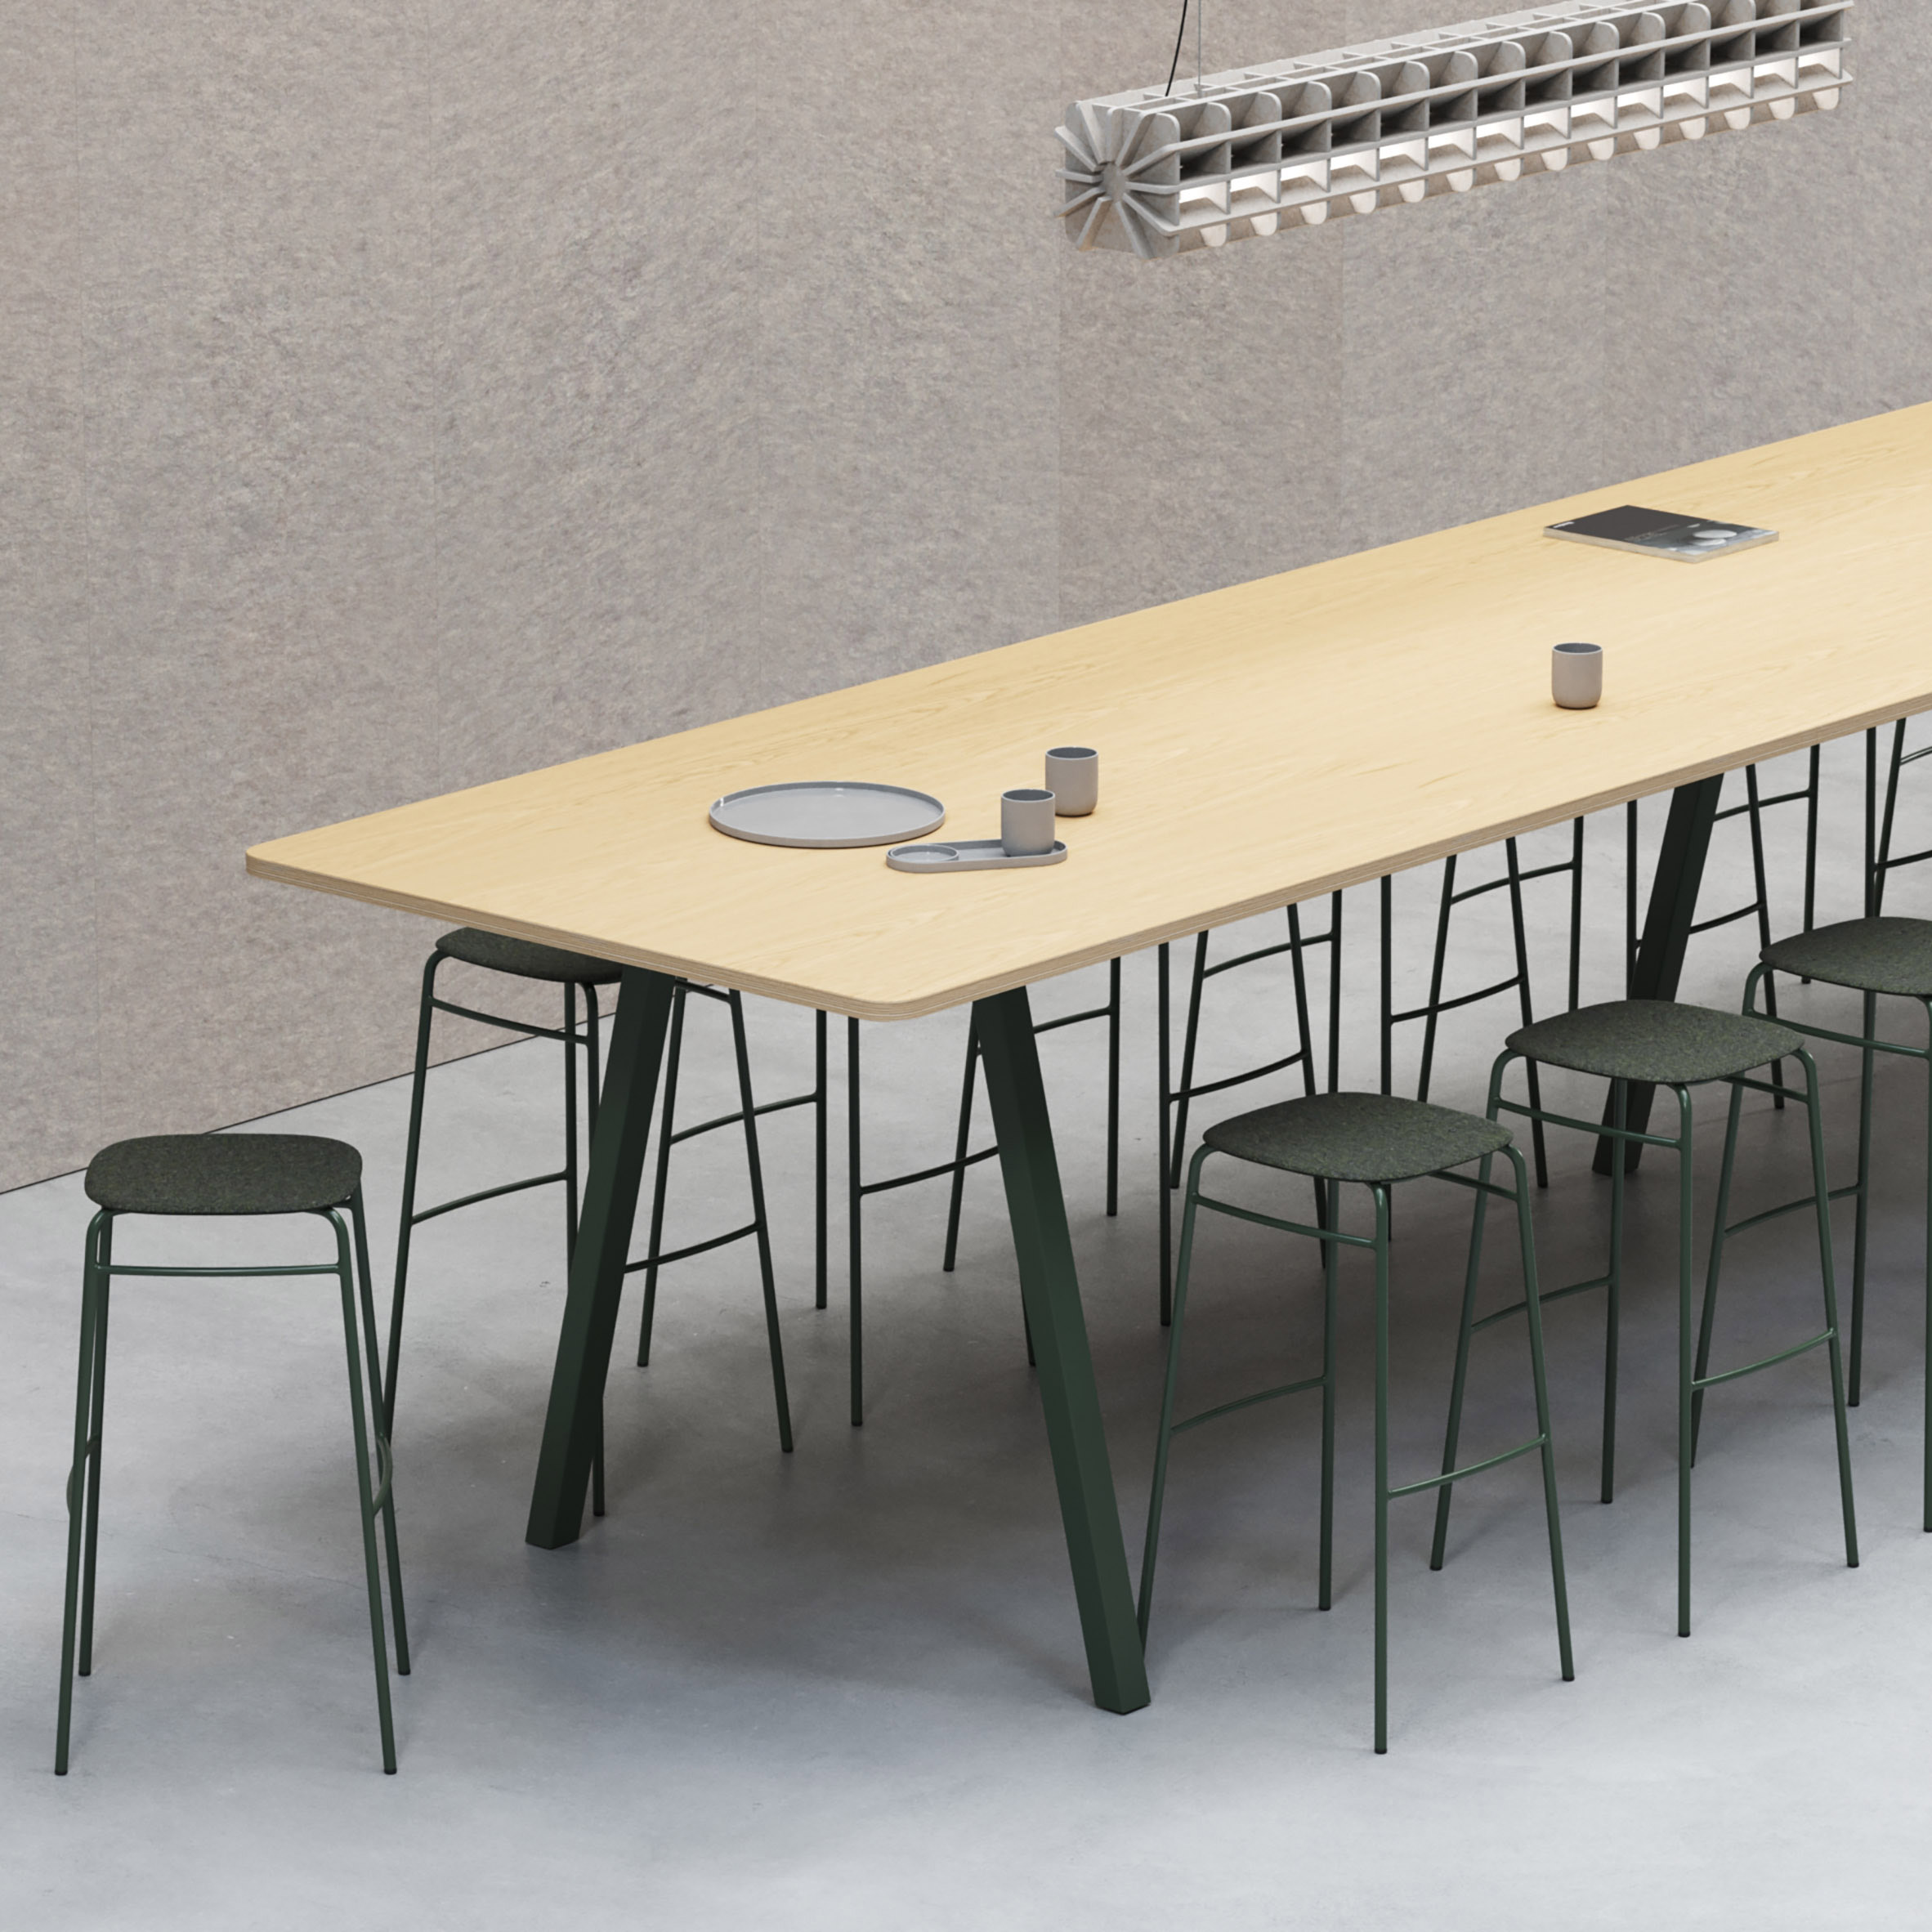 Big modular table system by Scandinavian furniture brand De Vorm